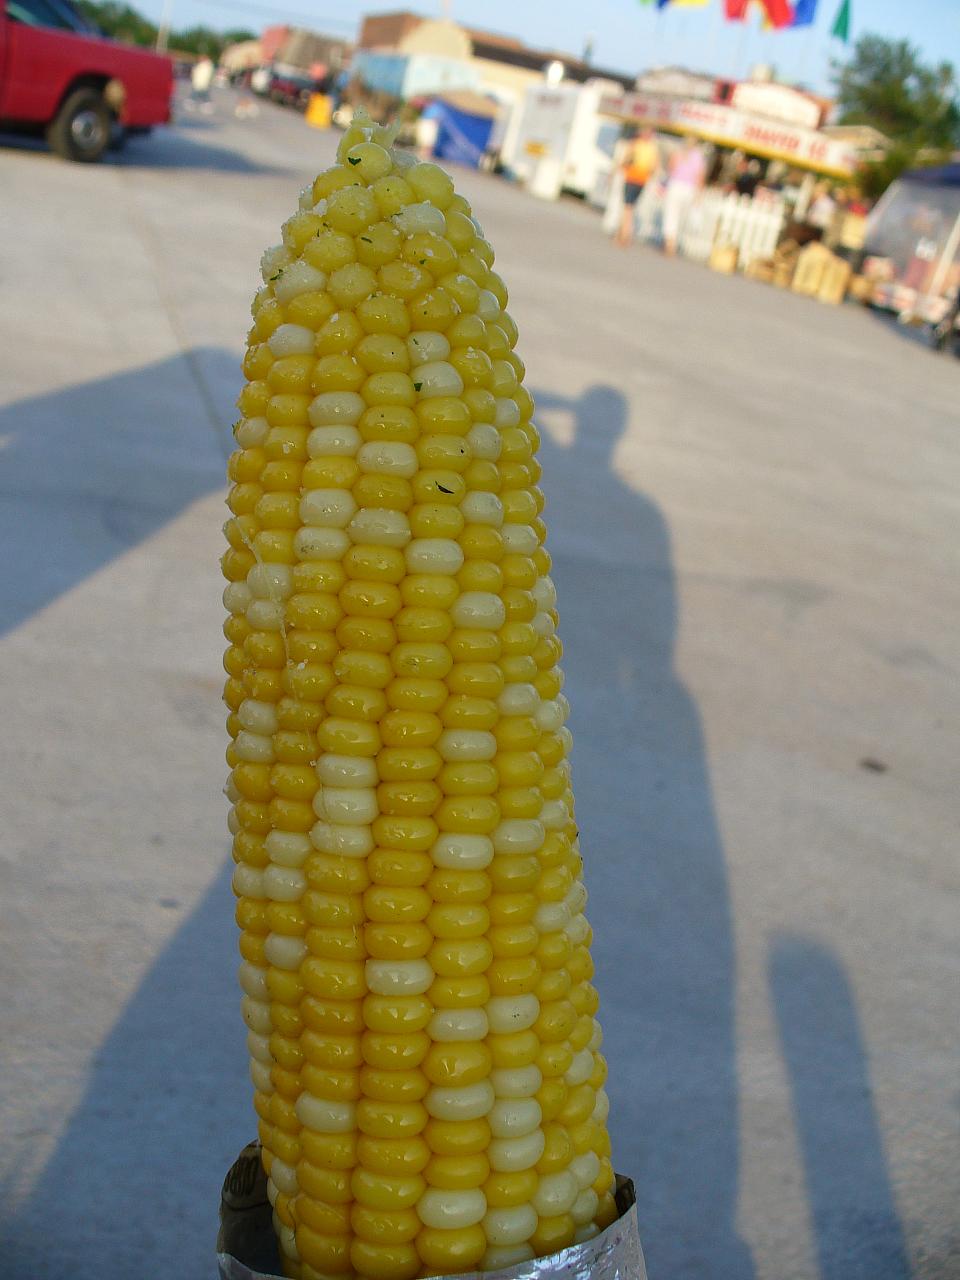 an ear of corn on a stick in a city street